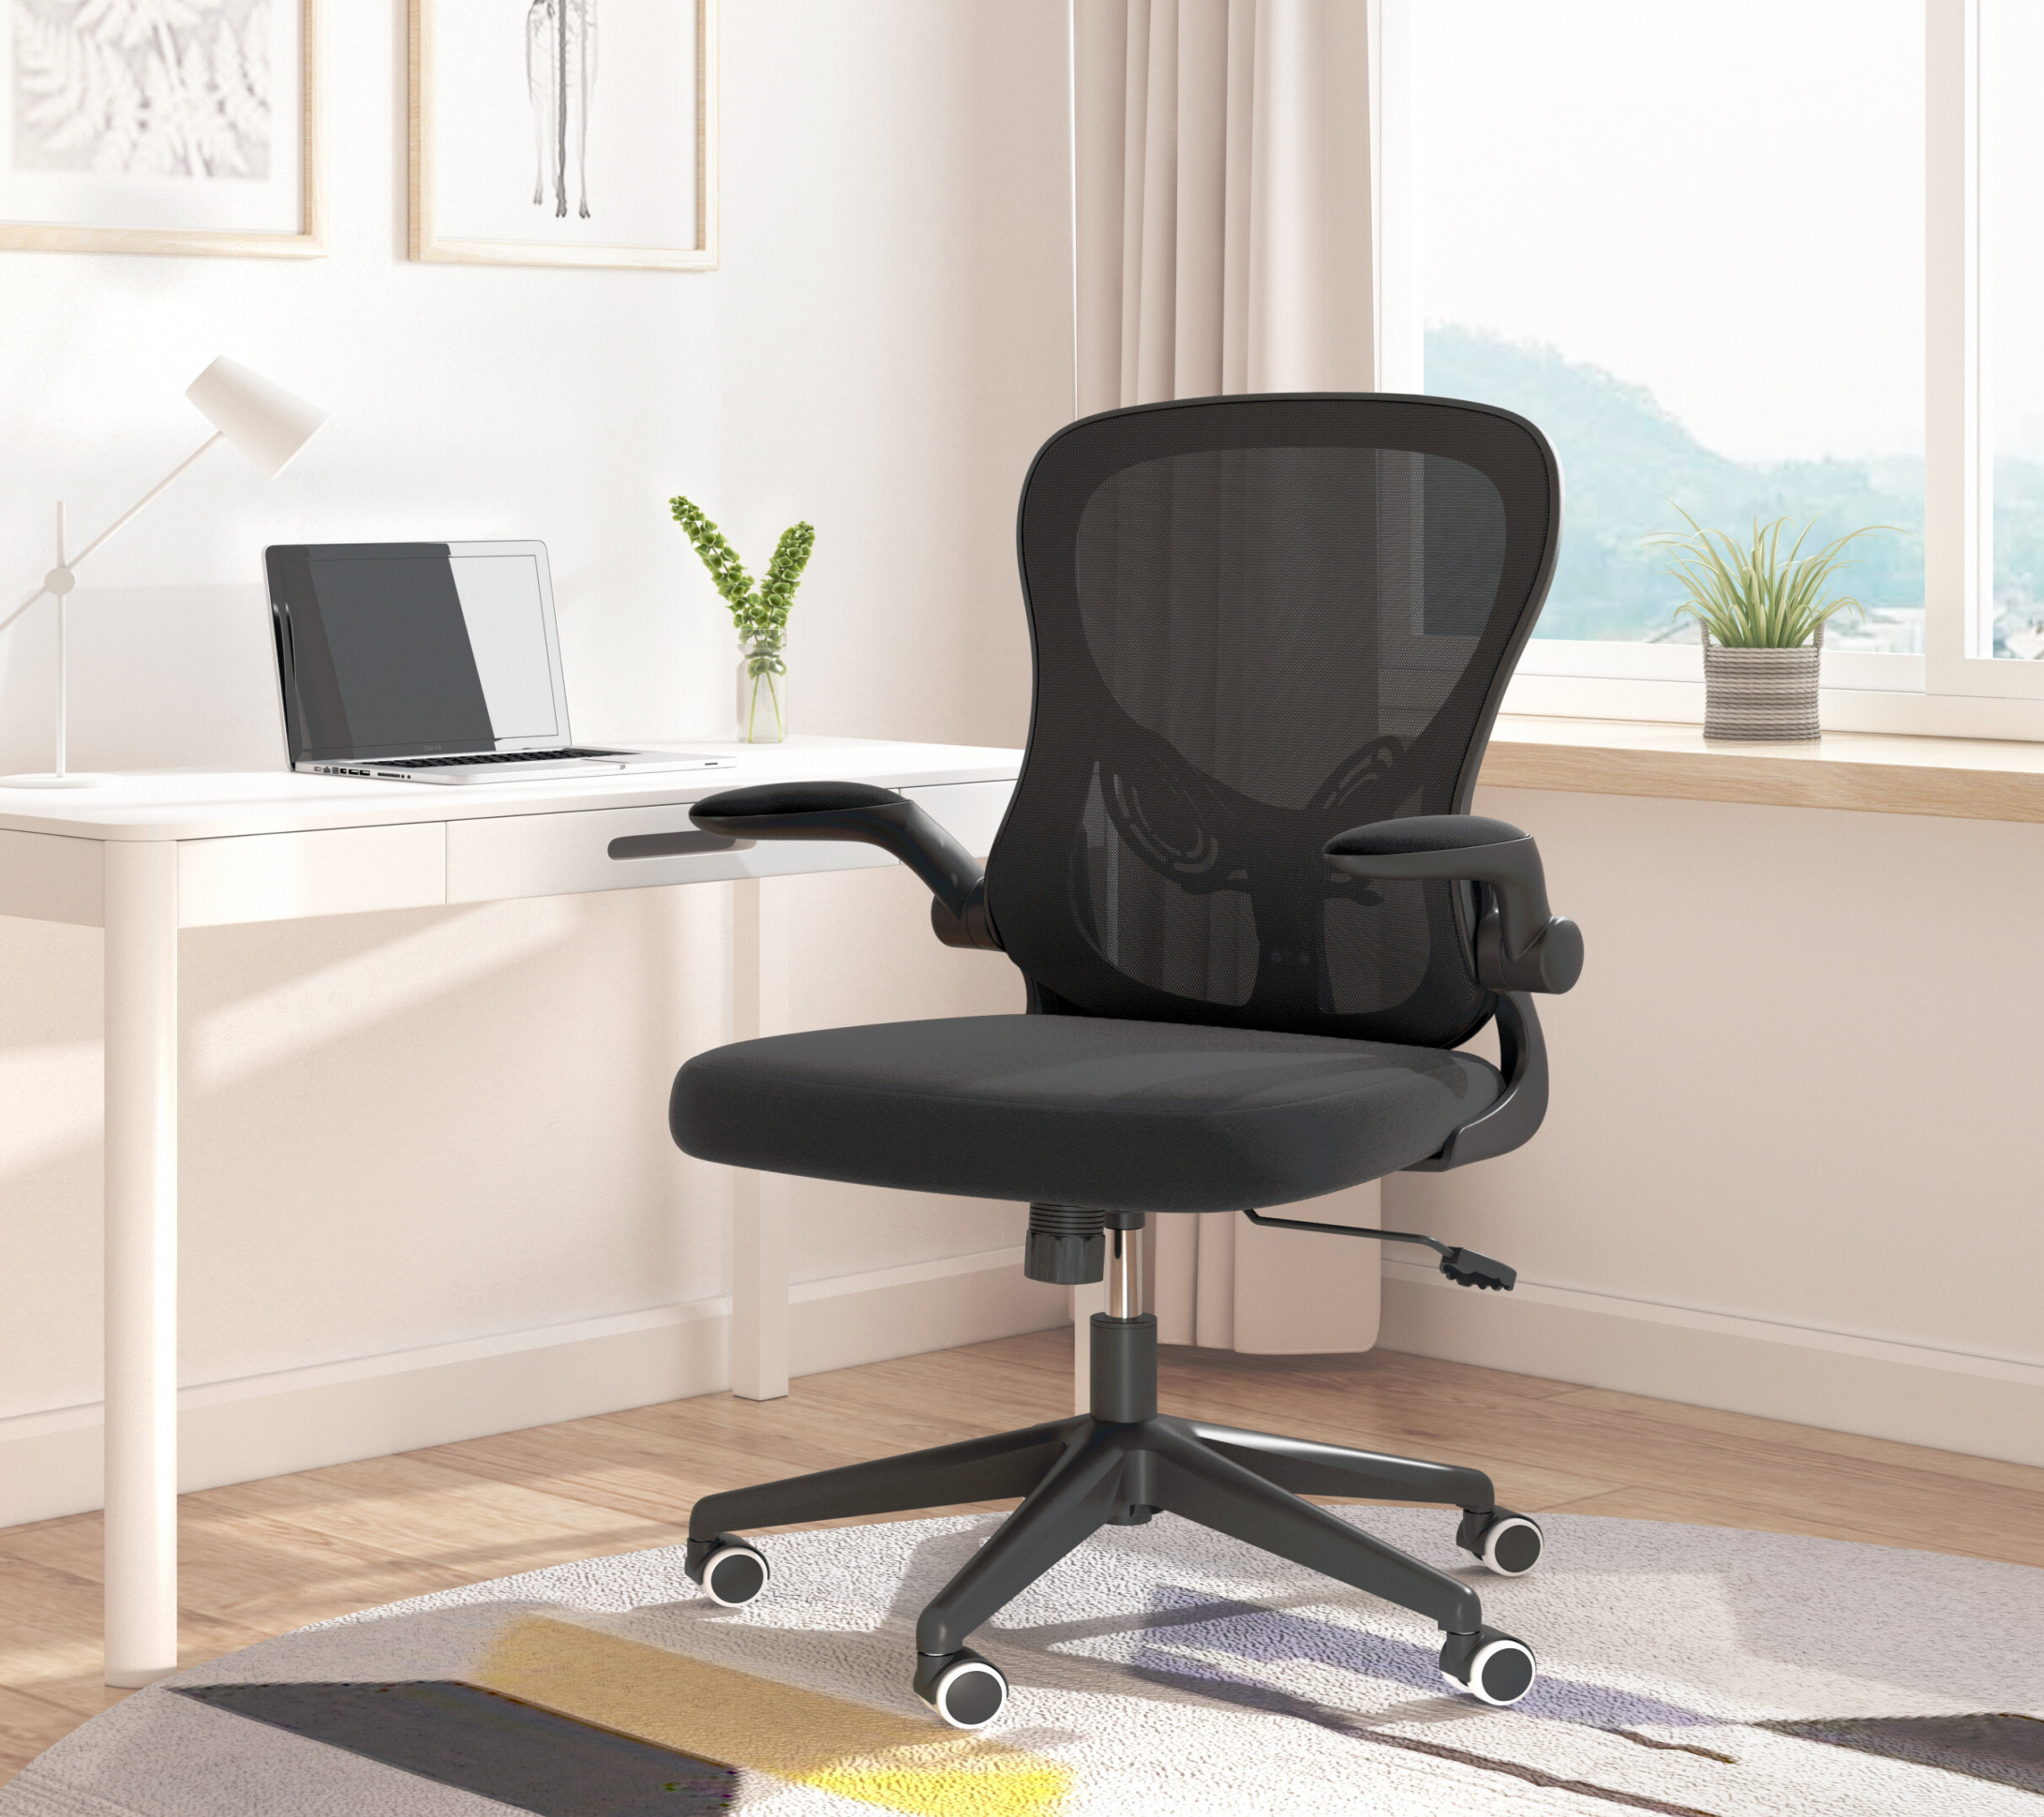 Wayfair Desk Chair